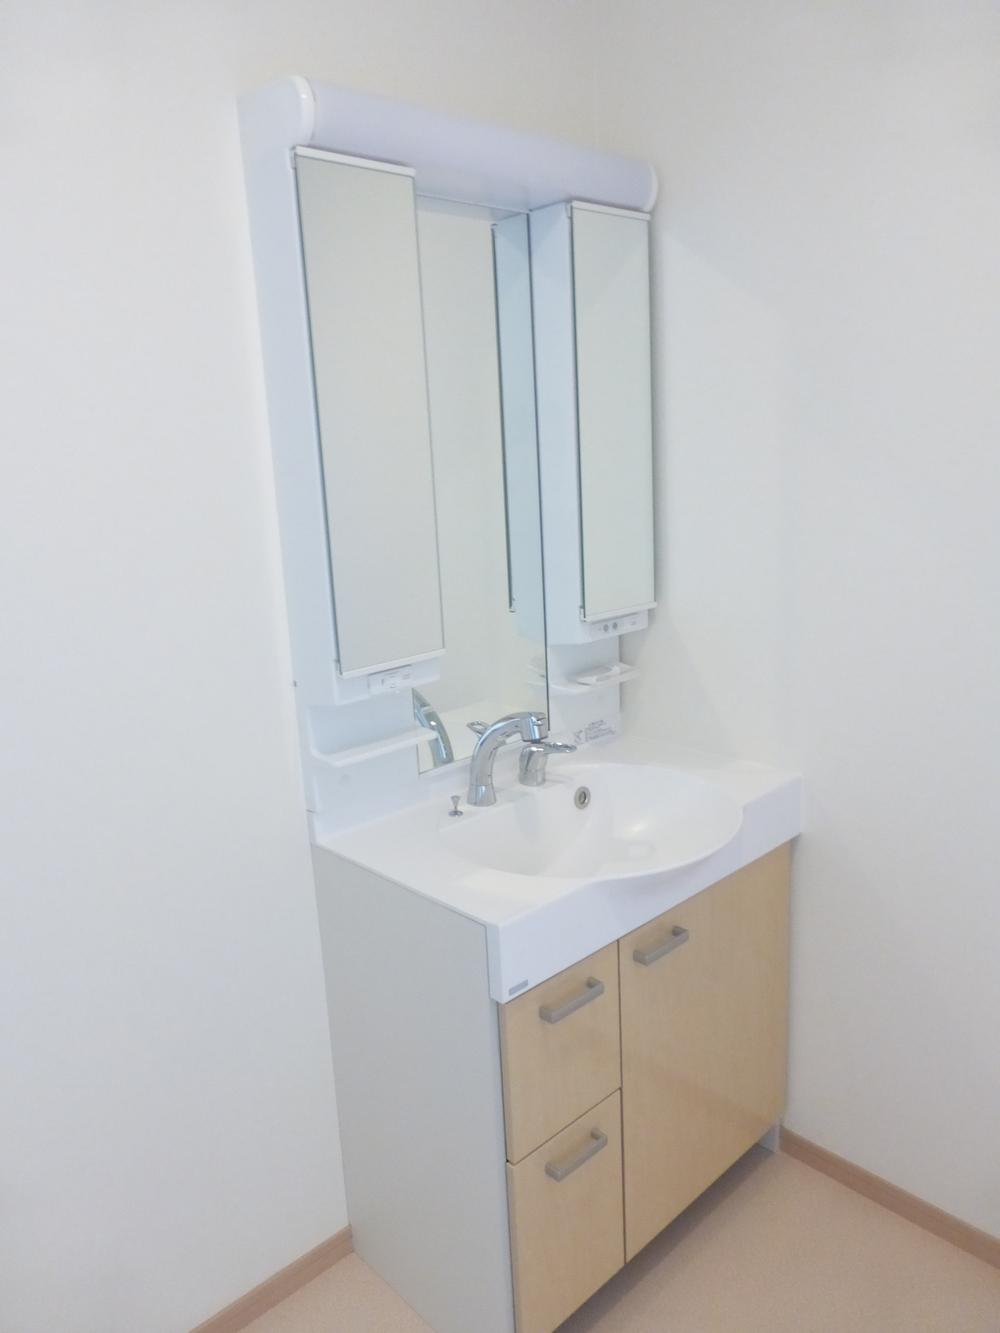 Wash basin, toilet. B Building Indoor (December 12, 2013) Shooting